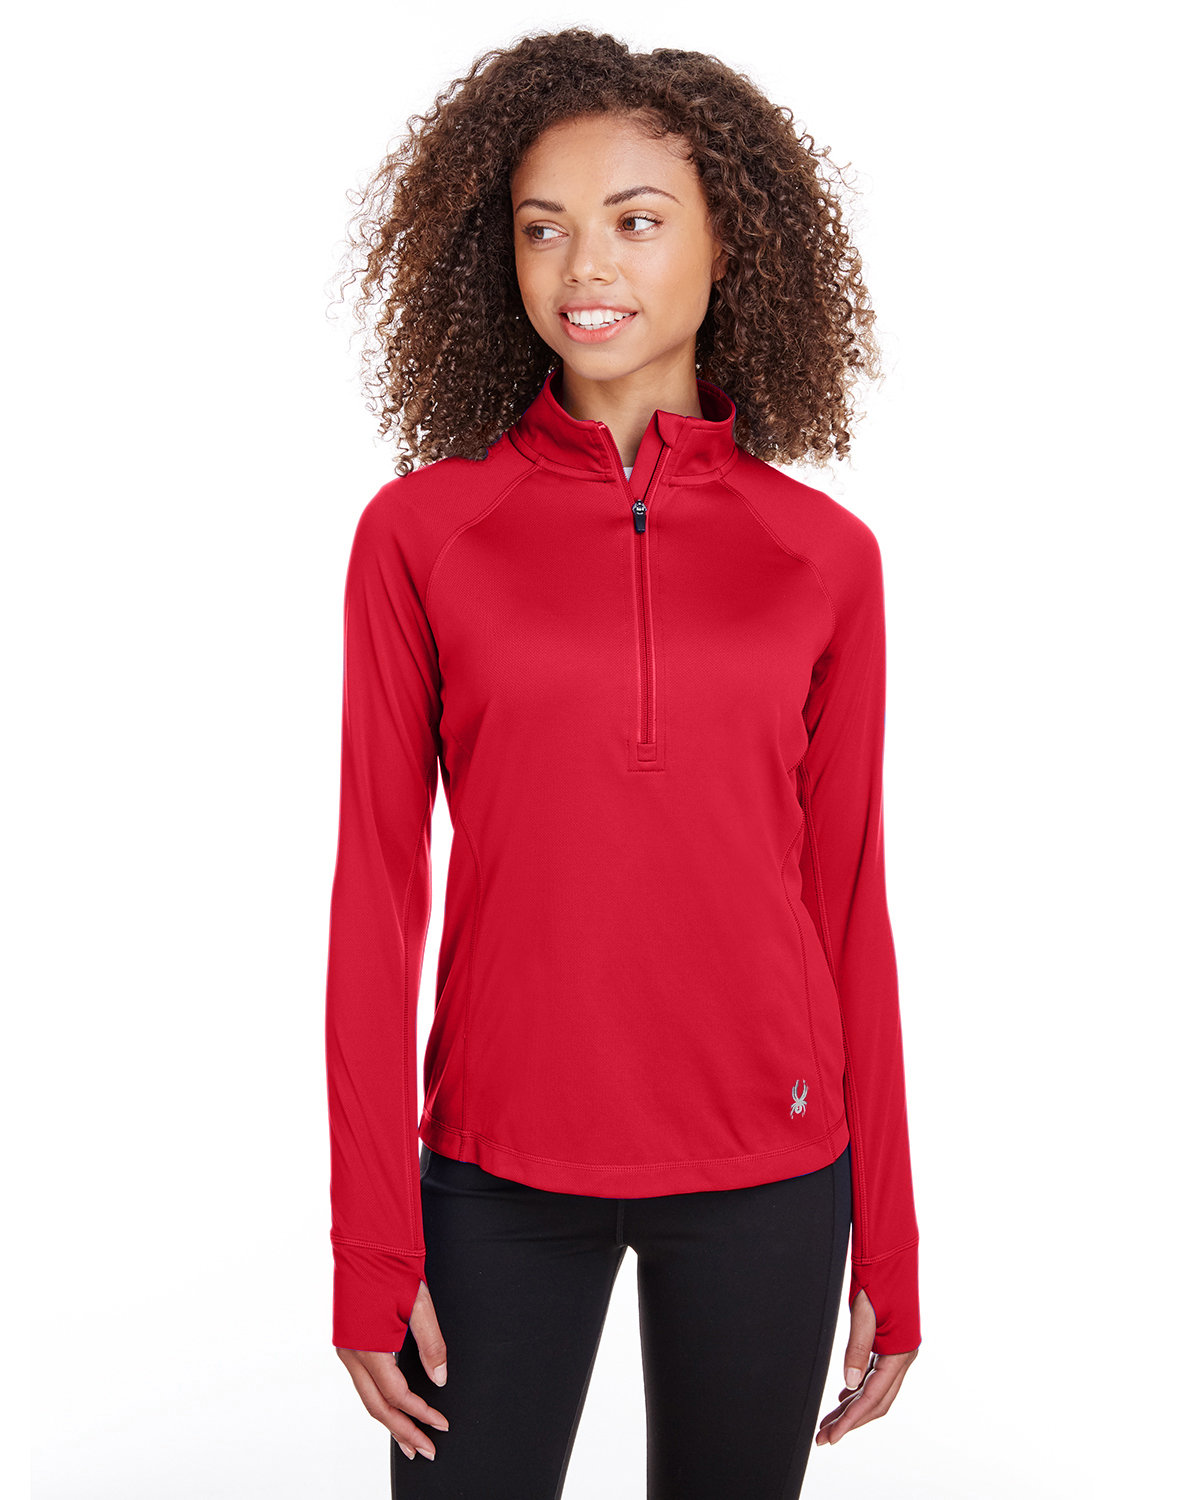 Spyder Ladies' 1/2 Zip Freestyle Pullover RED 